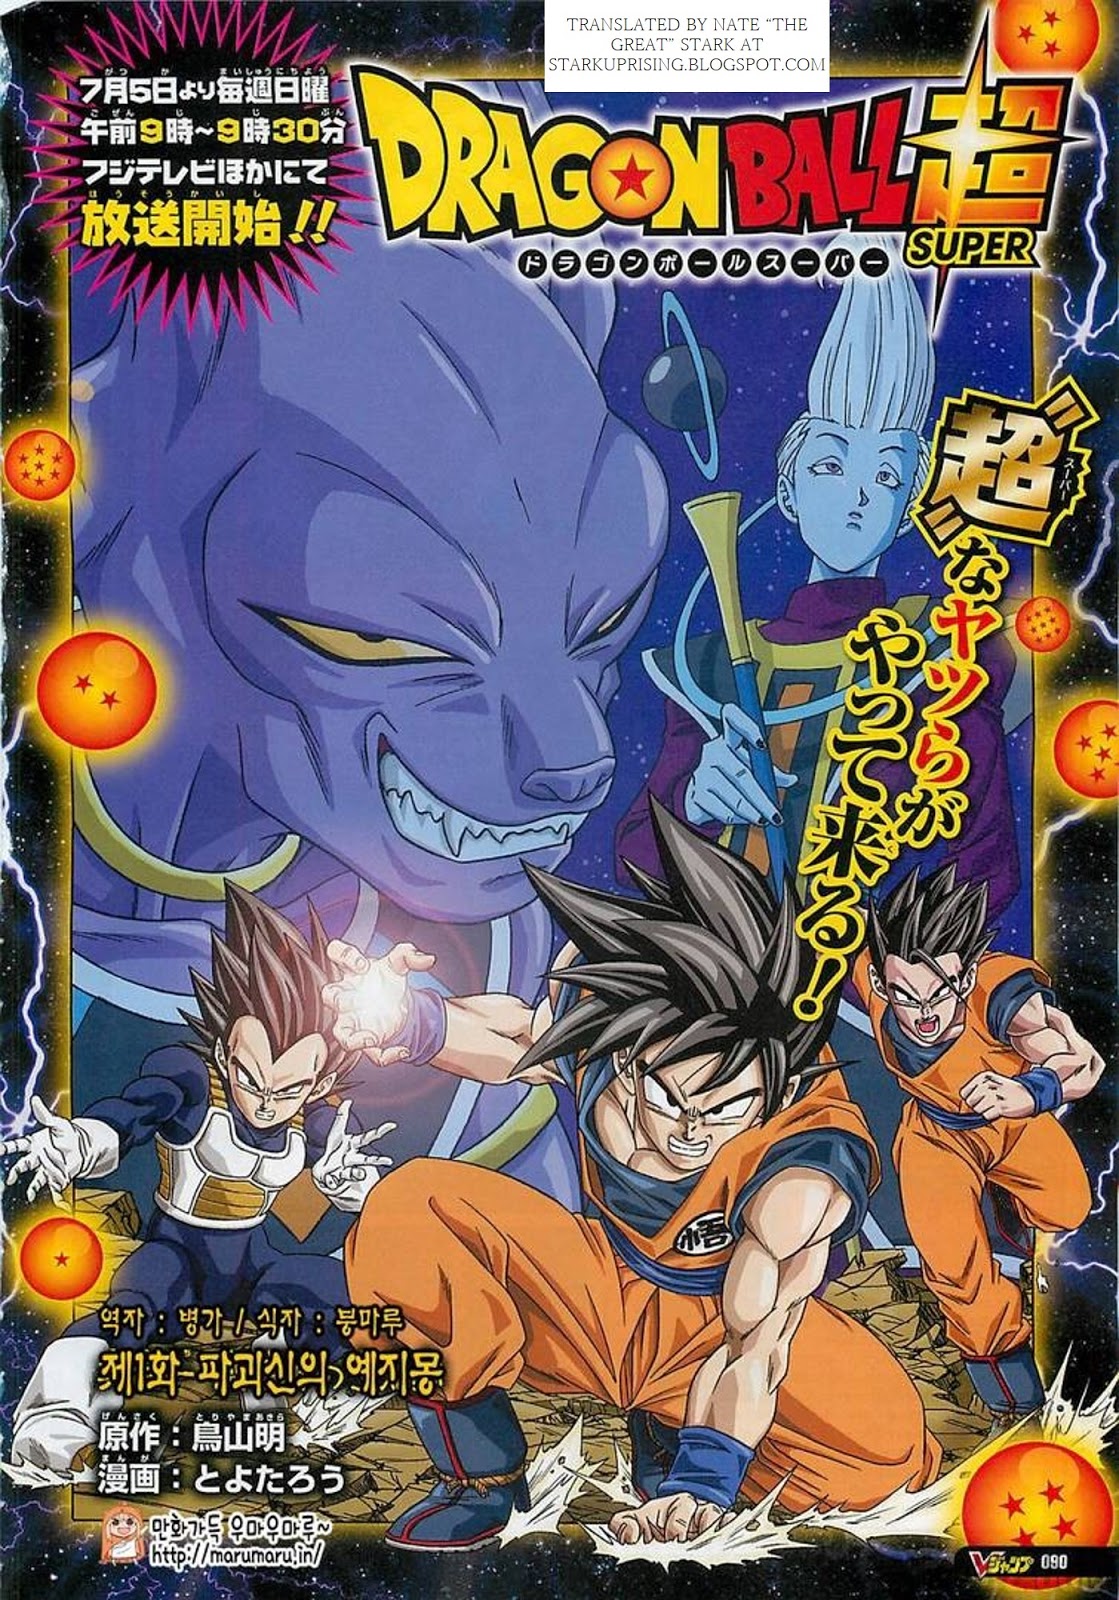 Manga Capitulo 8 De Dragon Ball Super - DRAGON BALL SUPER MANGA CAP 8 ESPAÑOL FULL HD 